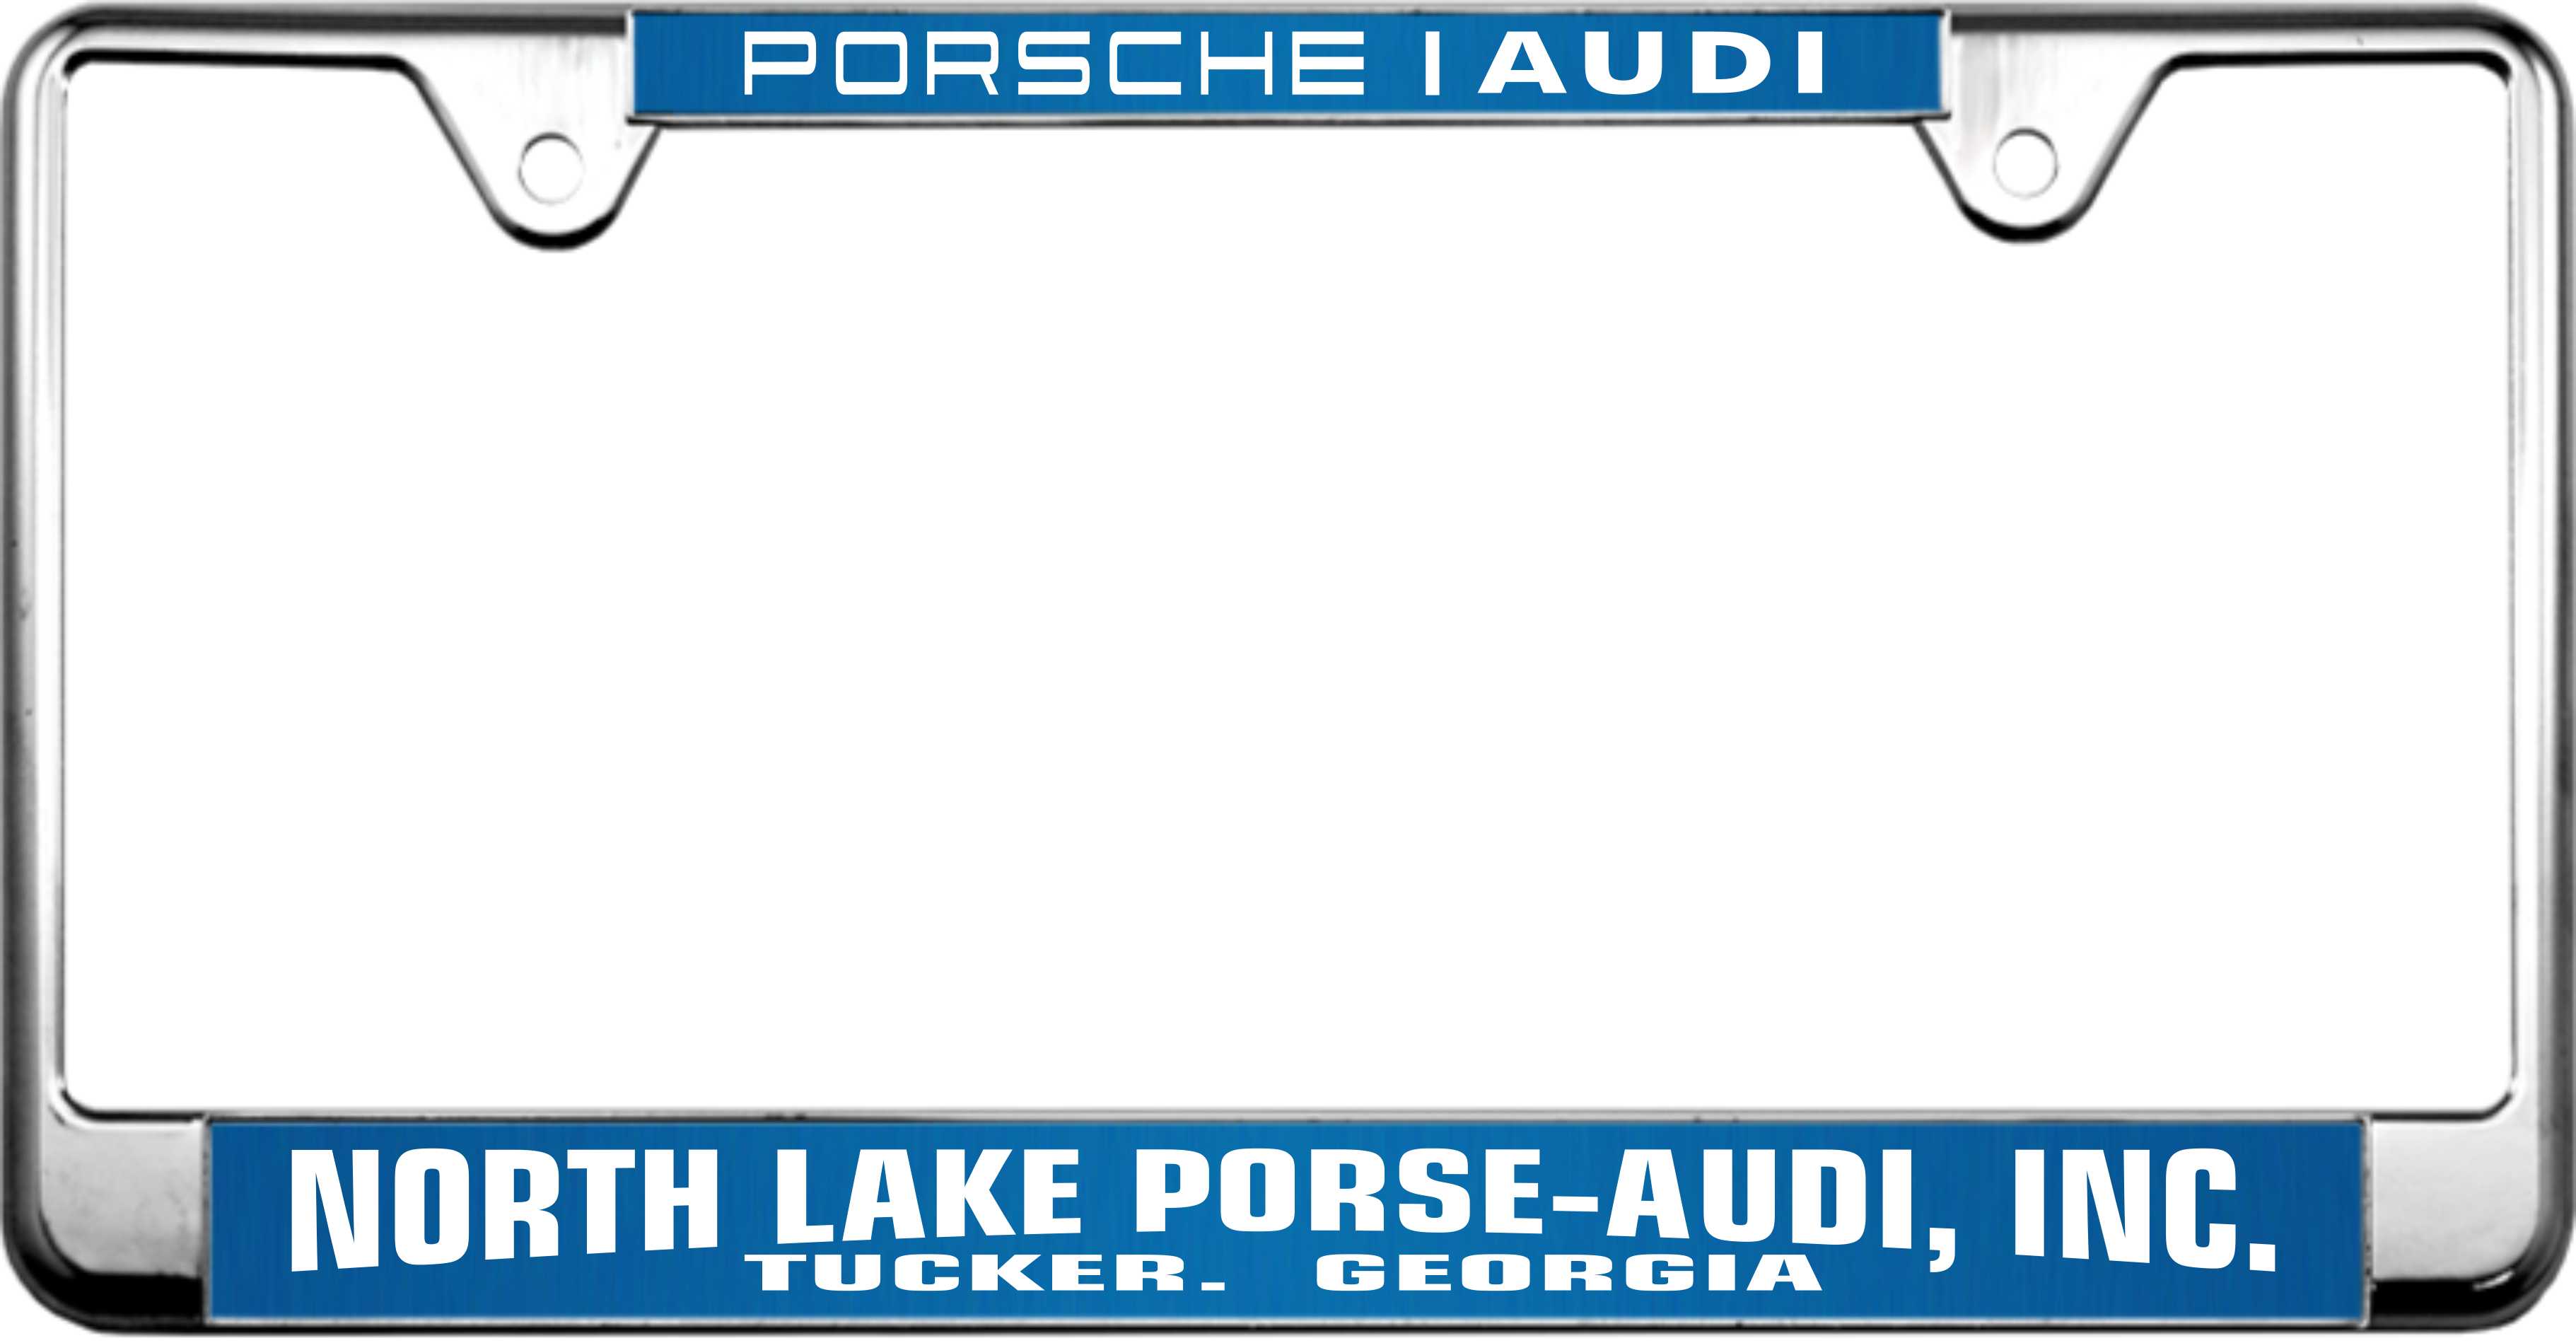 Porsche Audi - Custom License Plate Frame